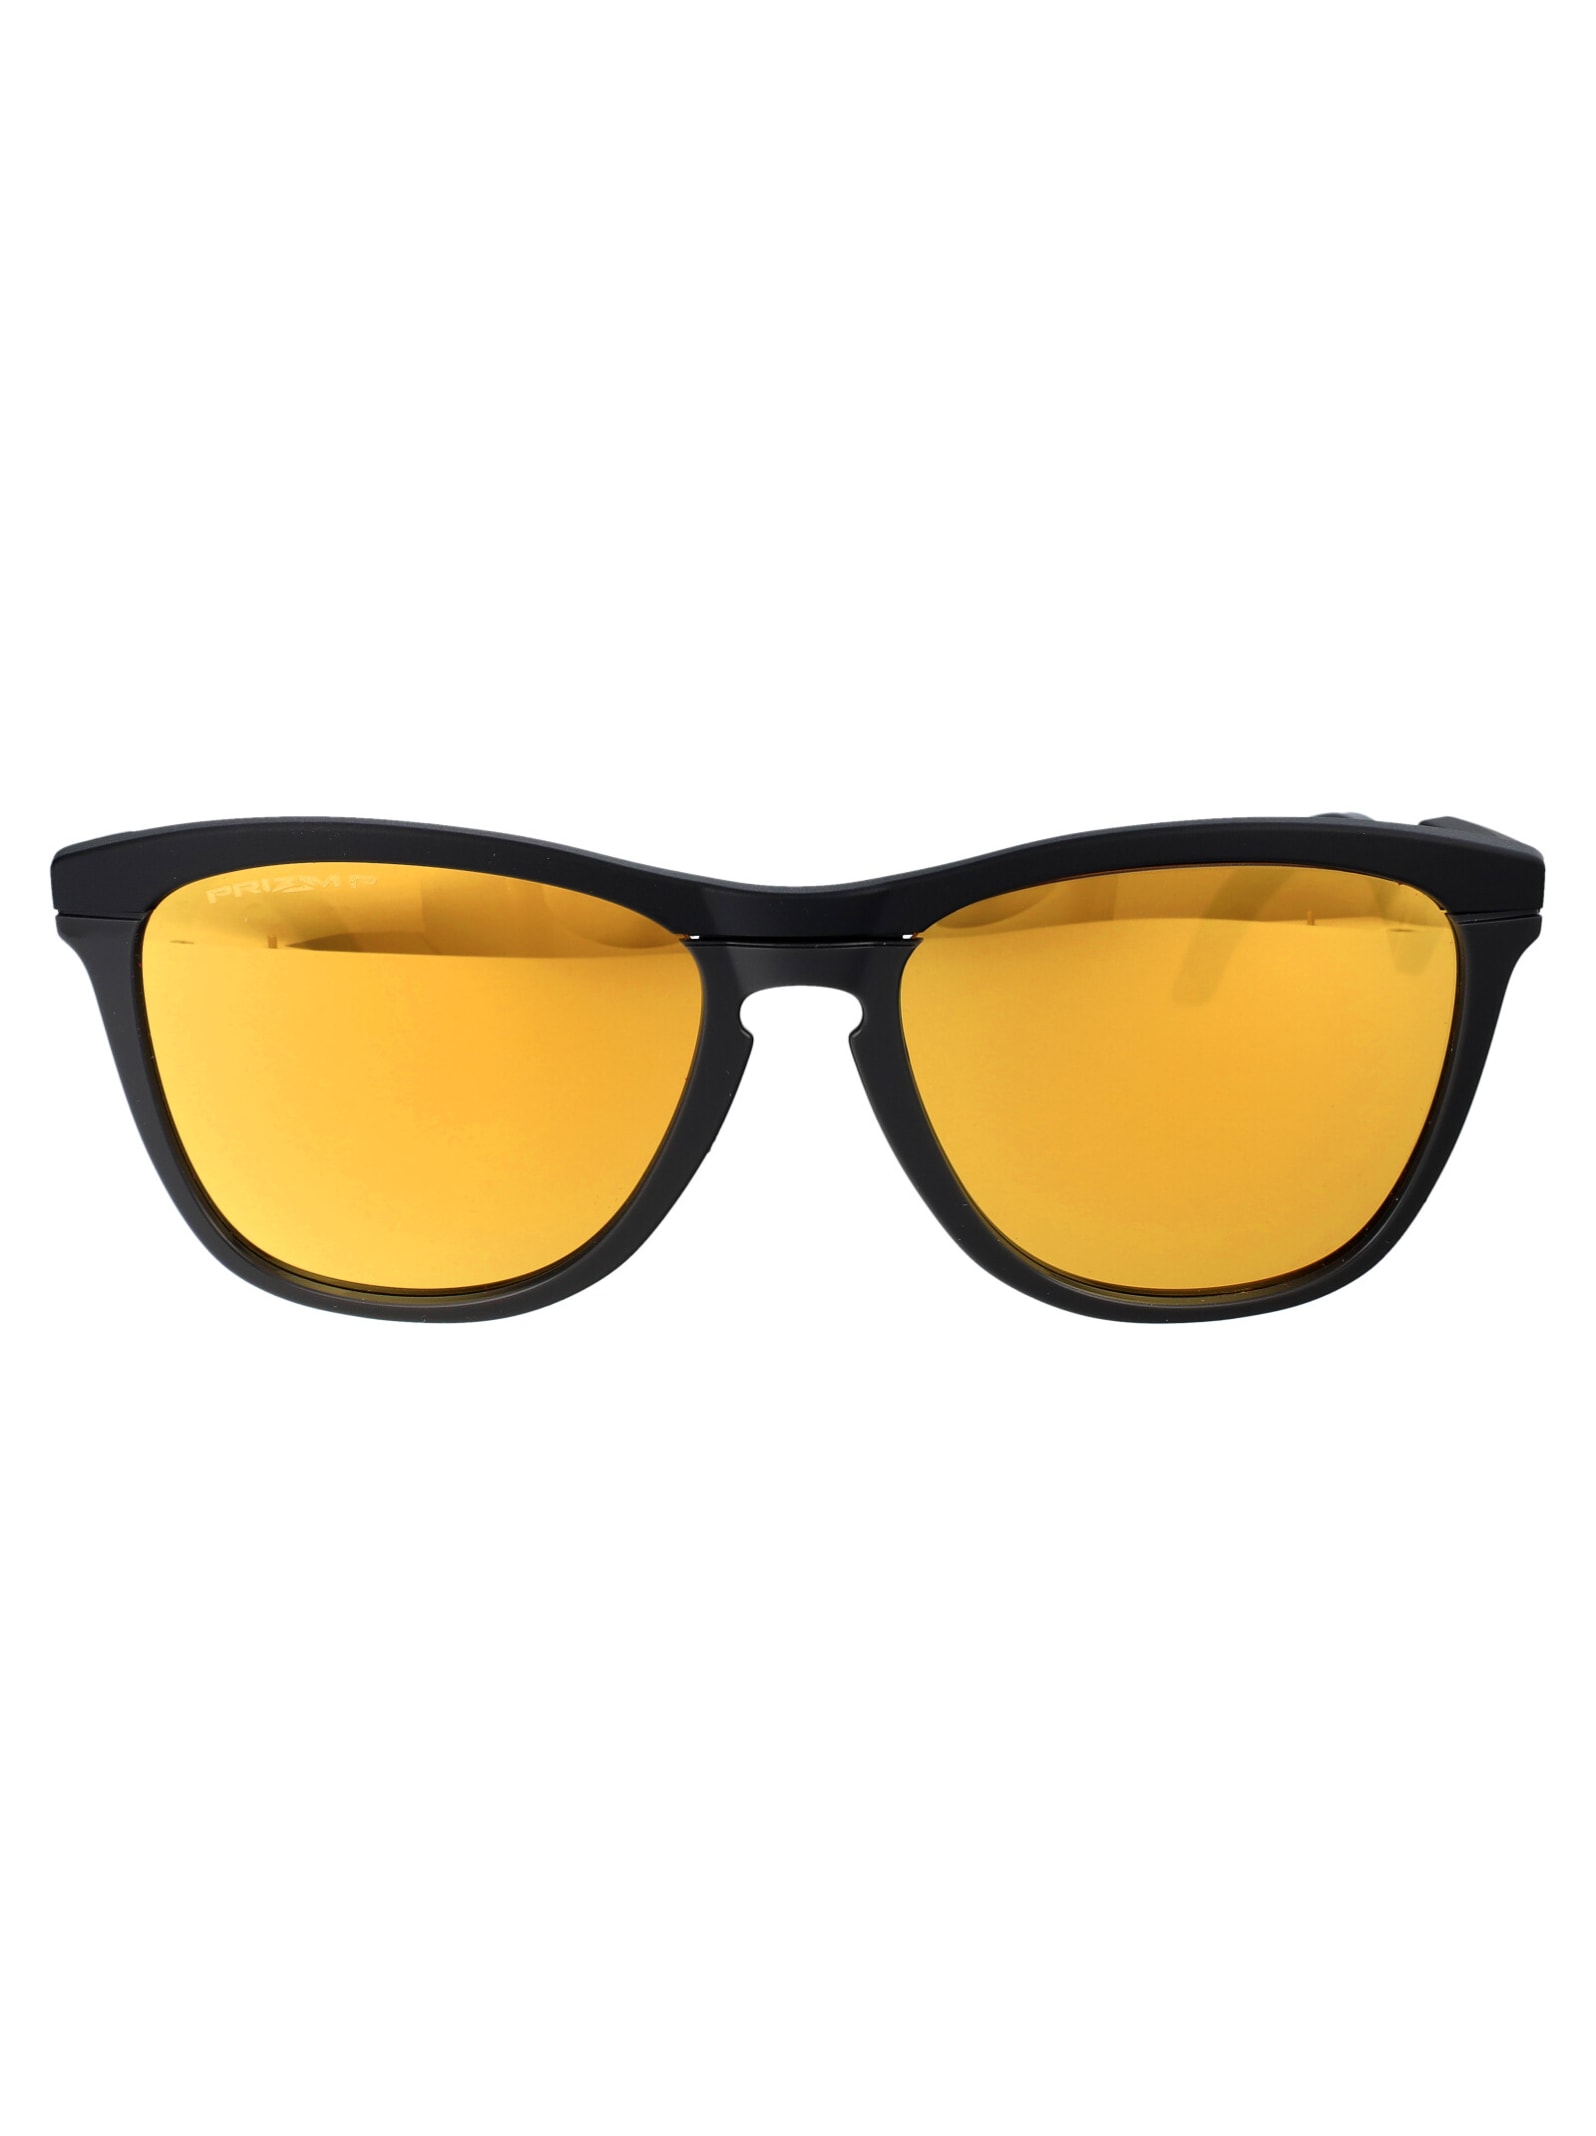 Oakley Frogskins Hybrid Sunglasses In Yellow